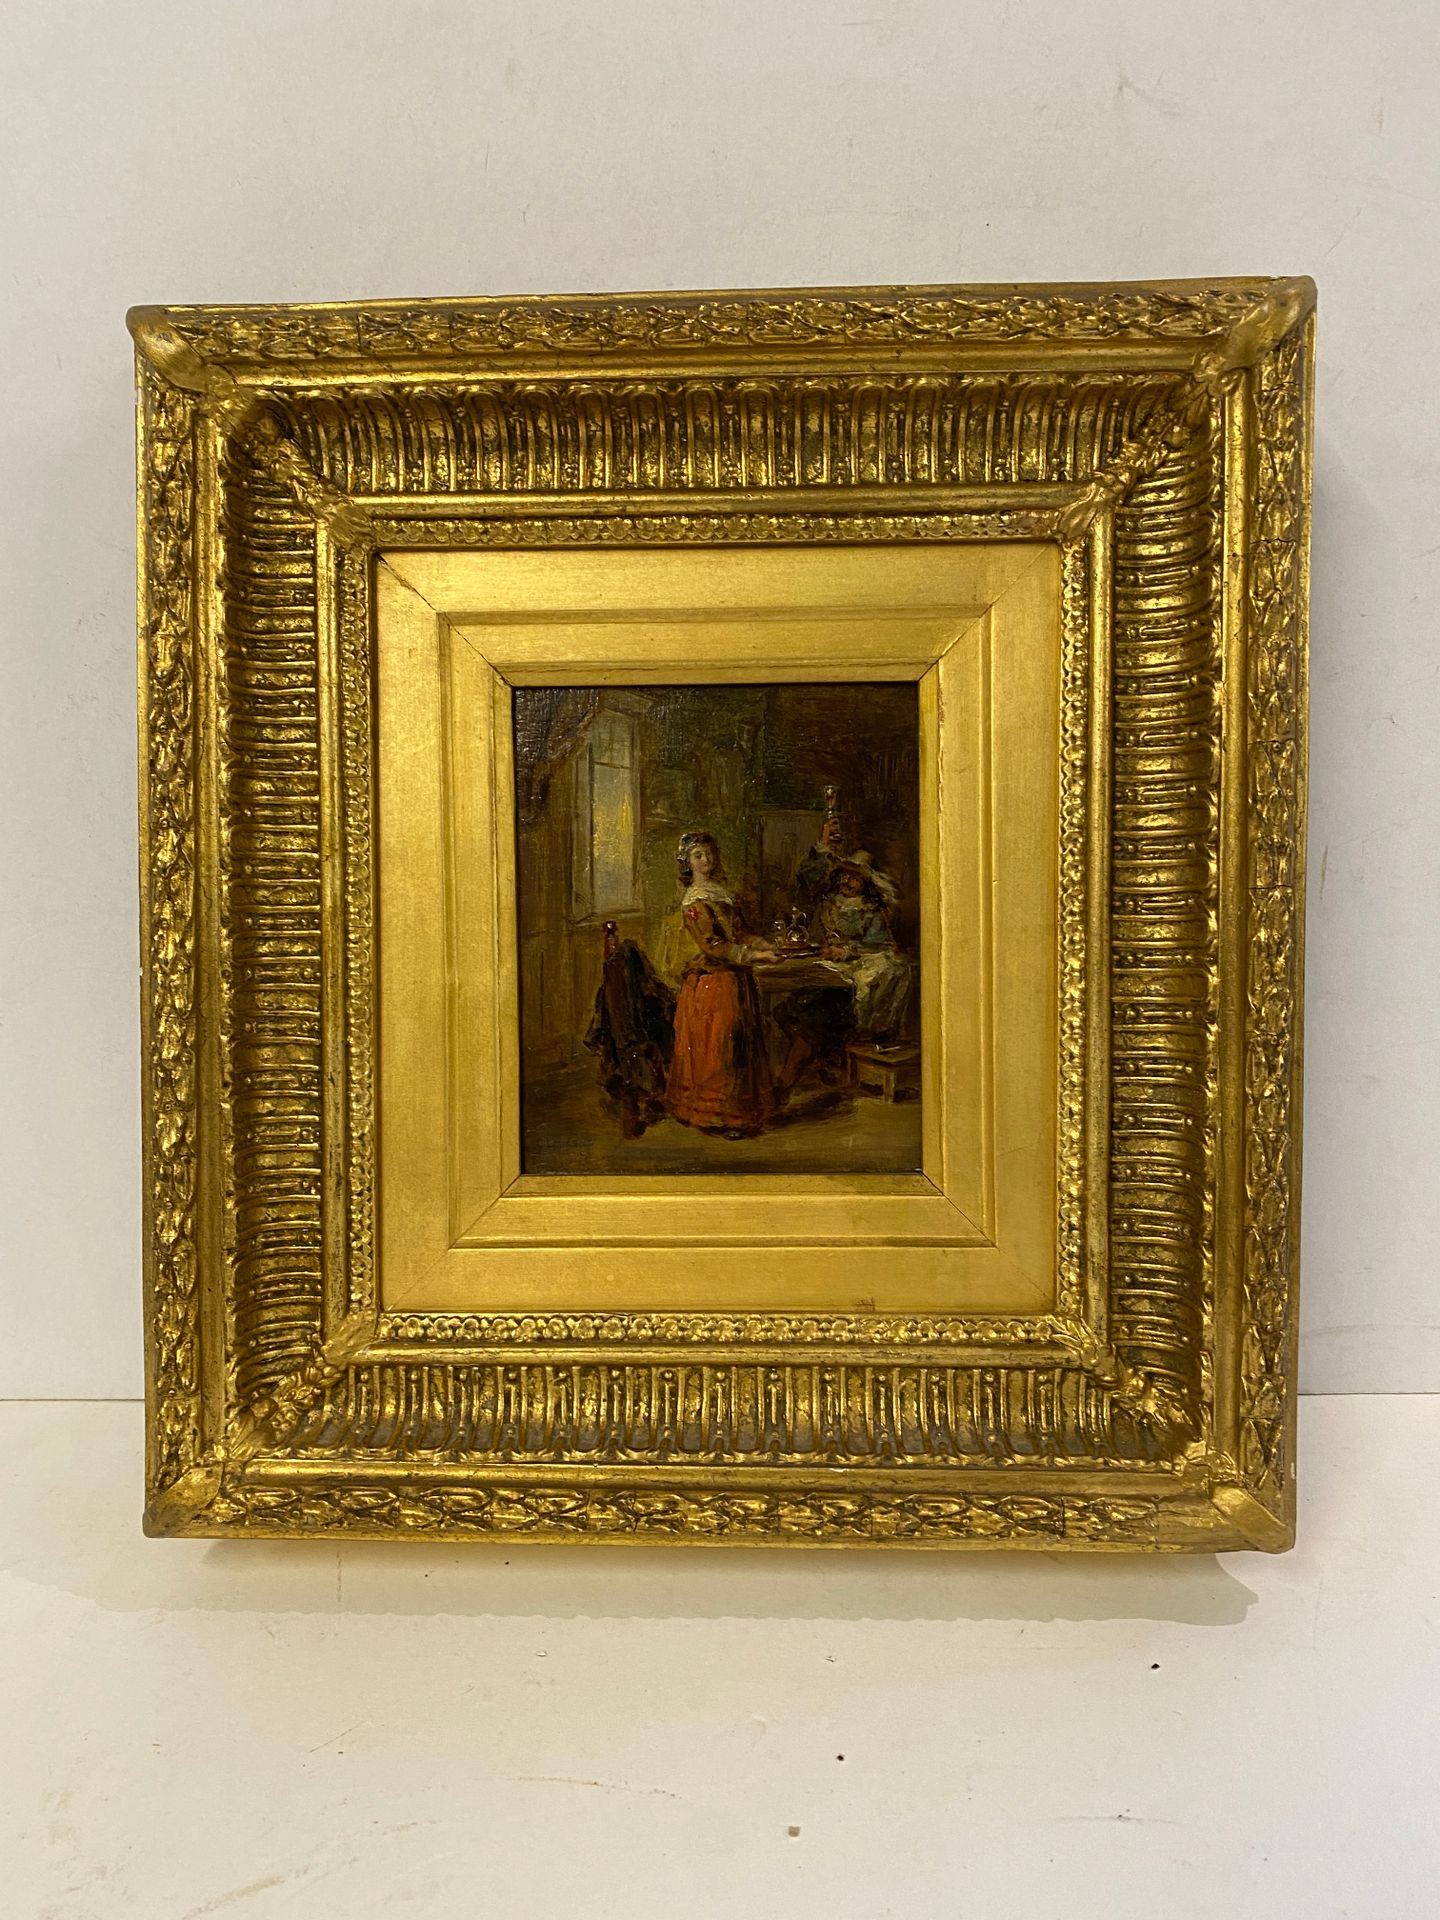 Null 查尔斯-兰瑟(1799-1879)

午餐

面板油画，左下角有签名。

尺寸：13 x 11厘米